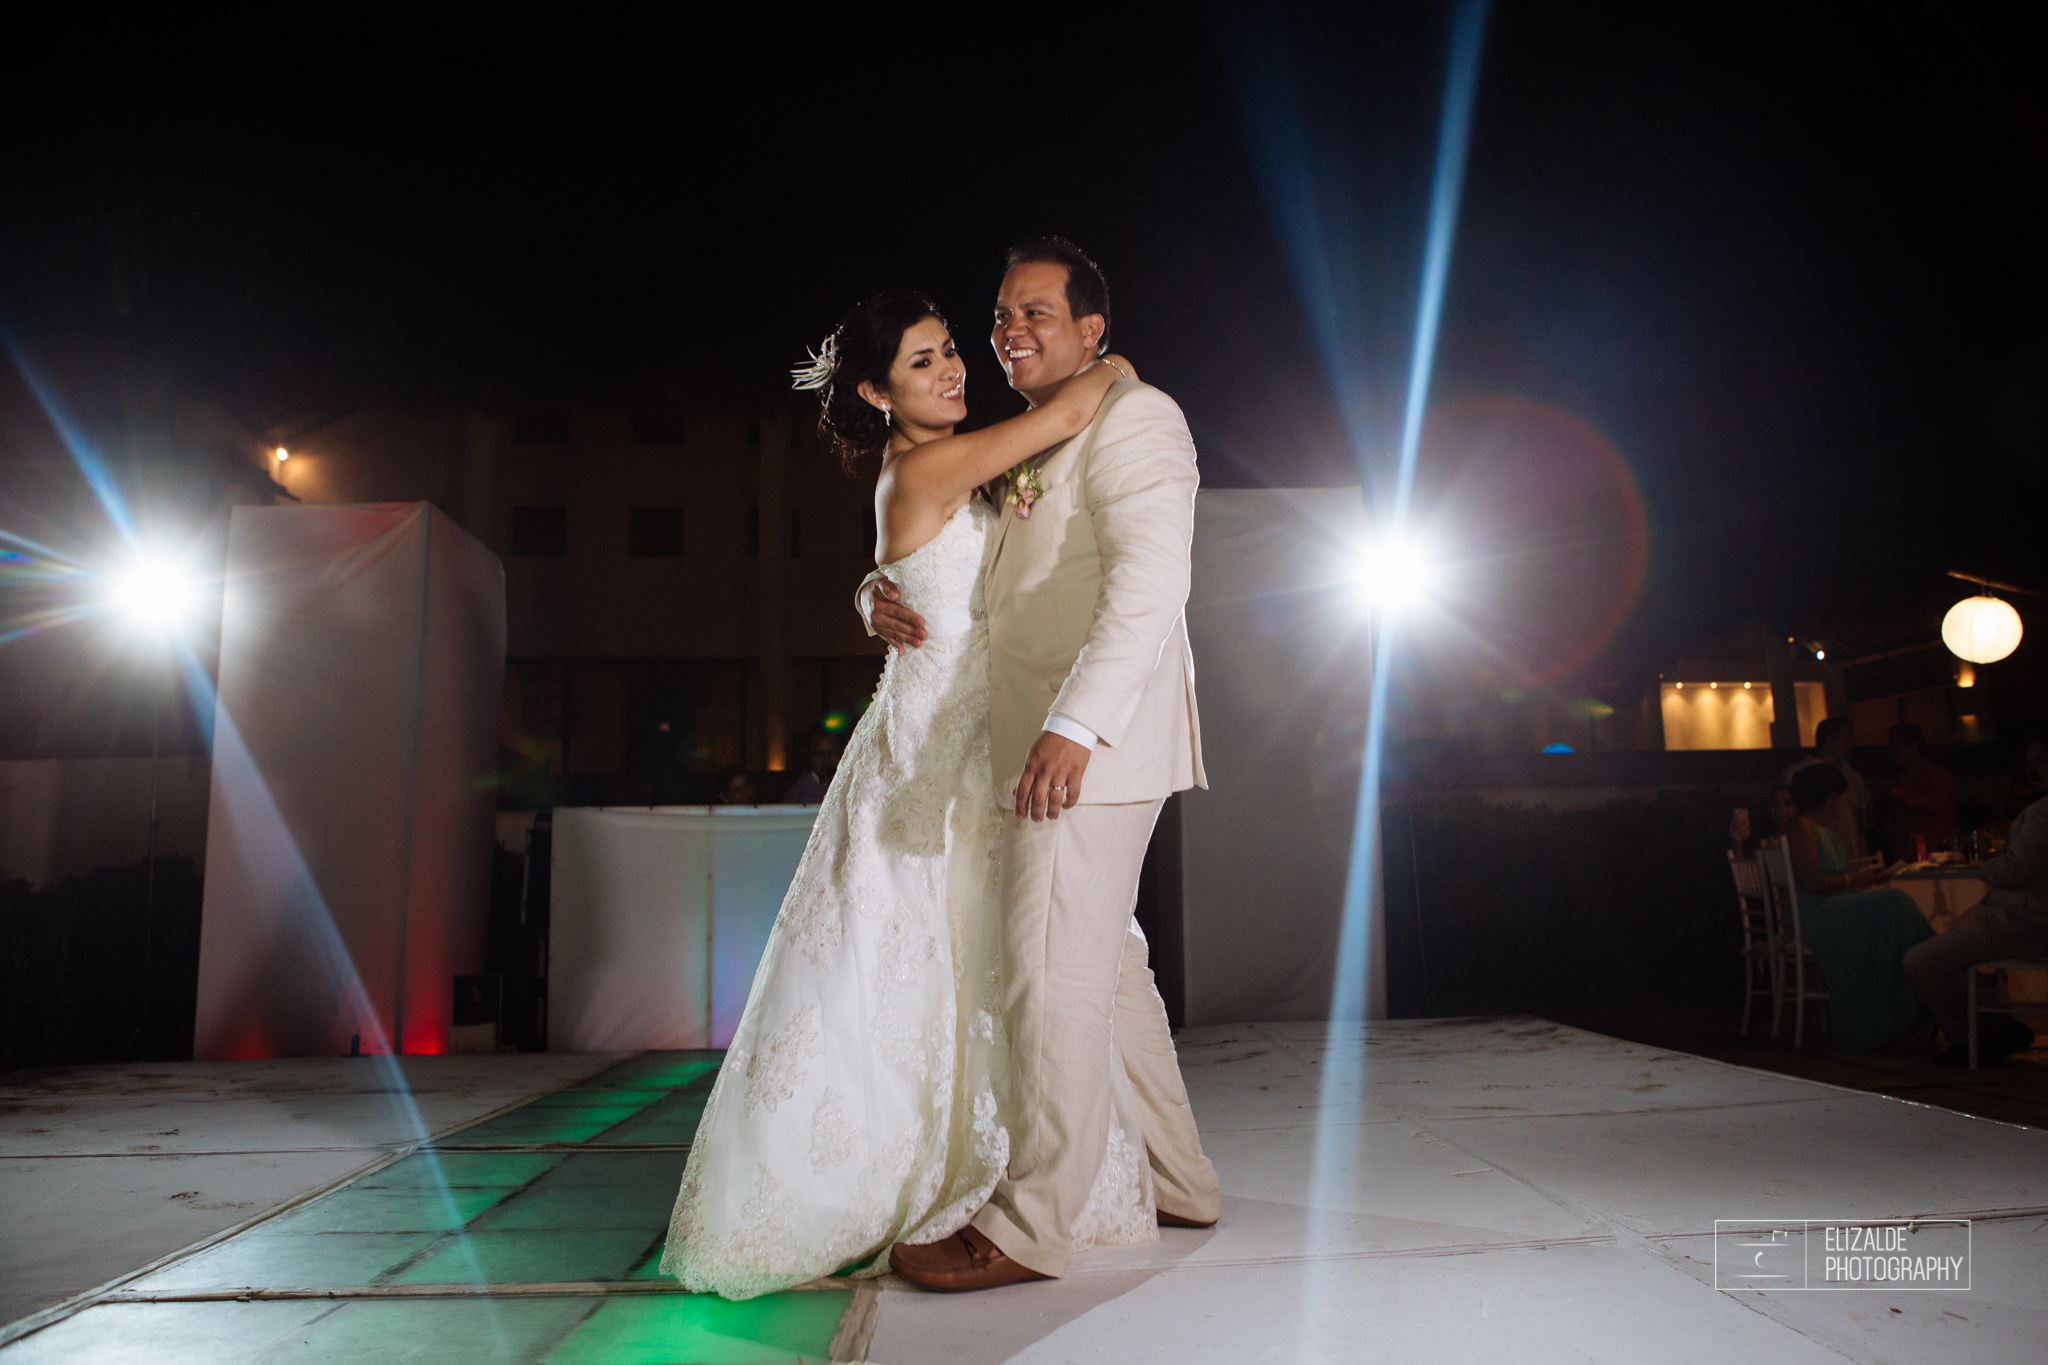 Pay and Ferran_Acapulco_Destination Wedding_Elizalde Photography-115.jpg